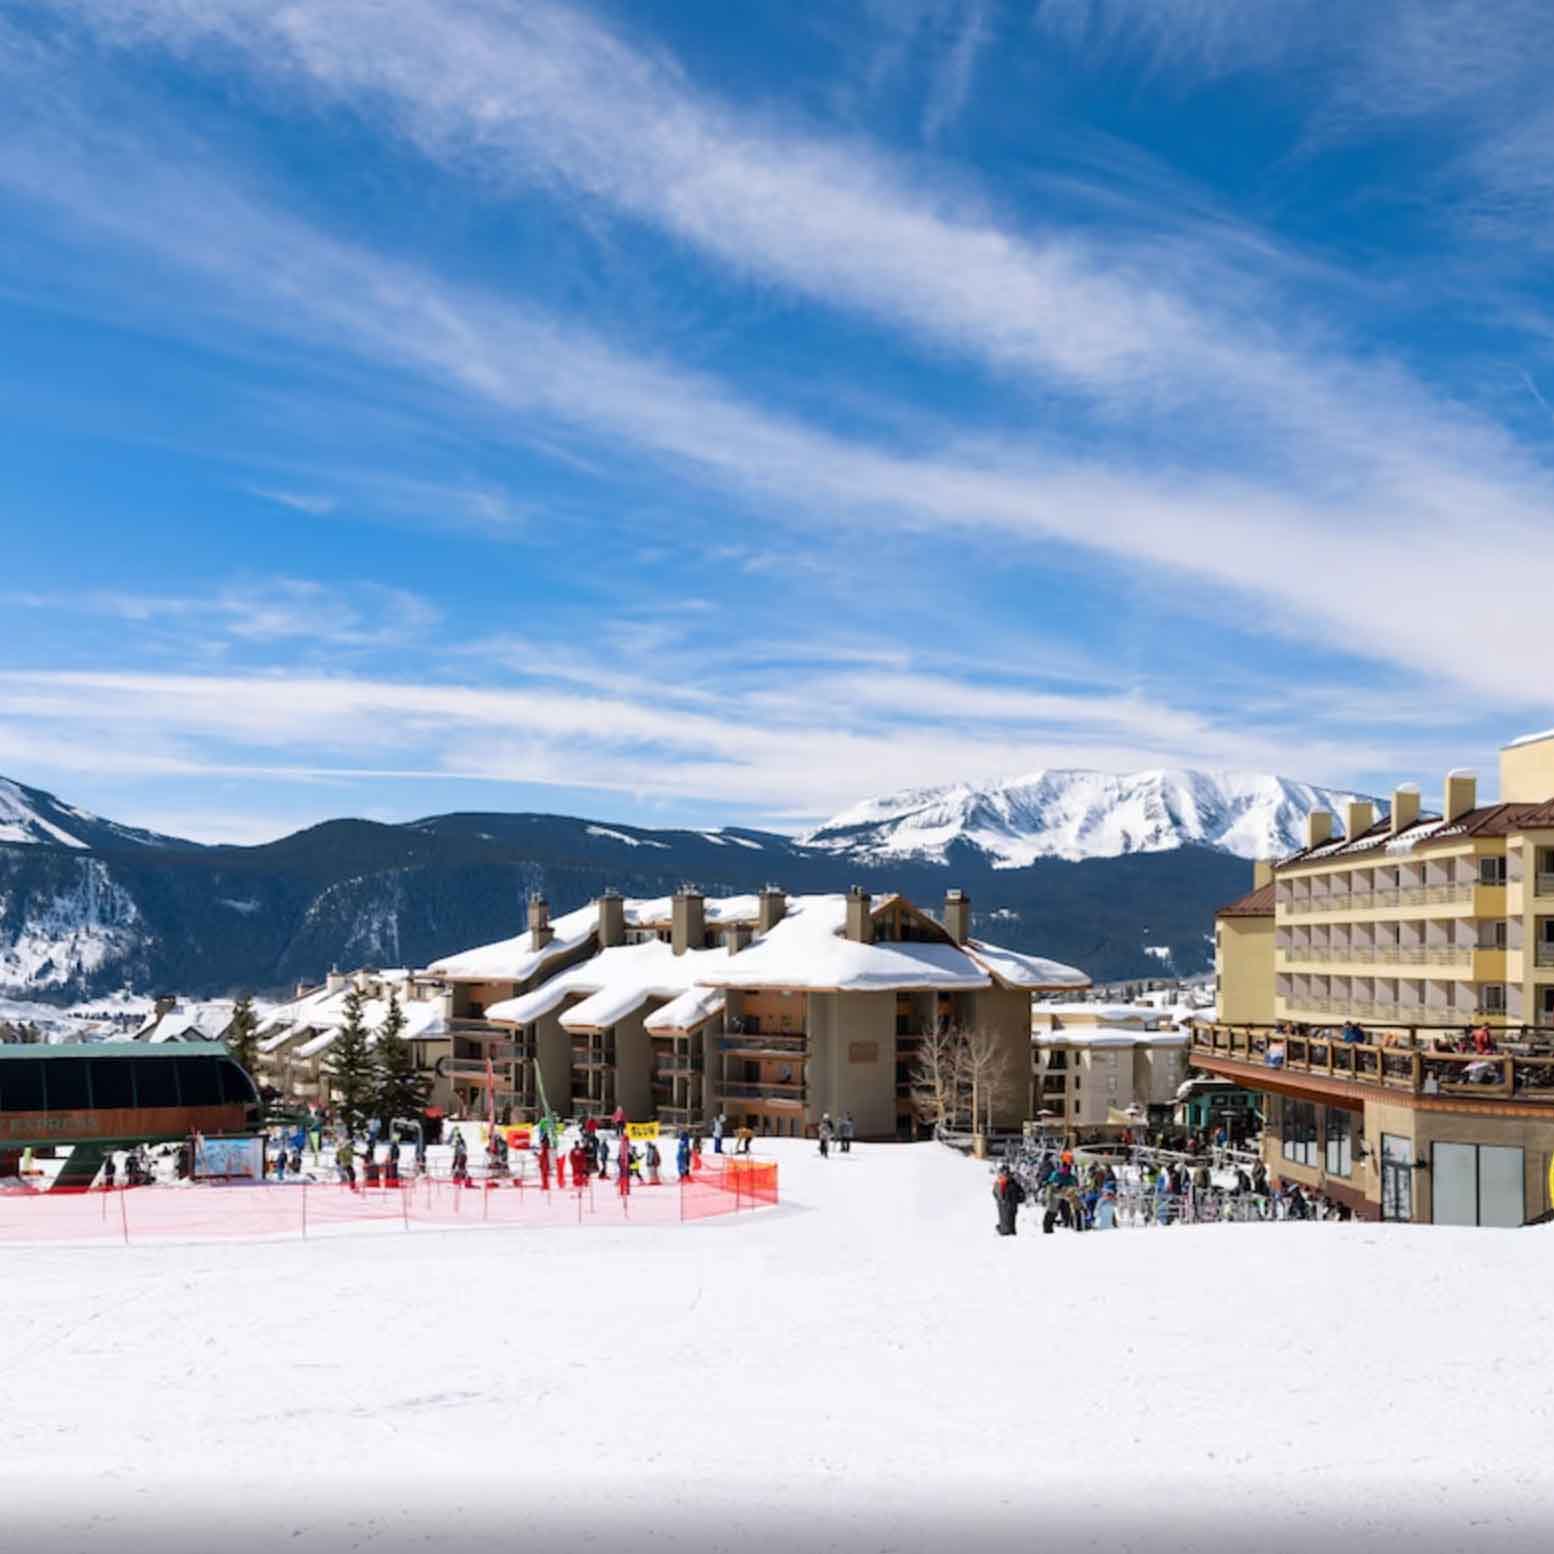 View of Elevation Hotel & Spa ski mountain